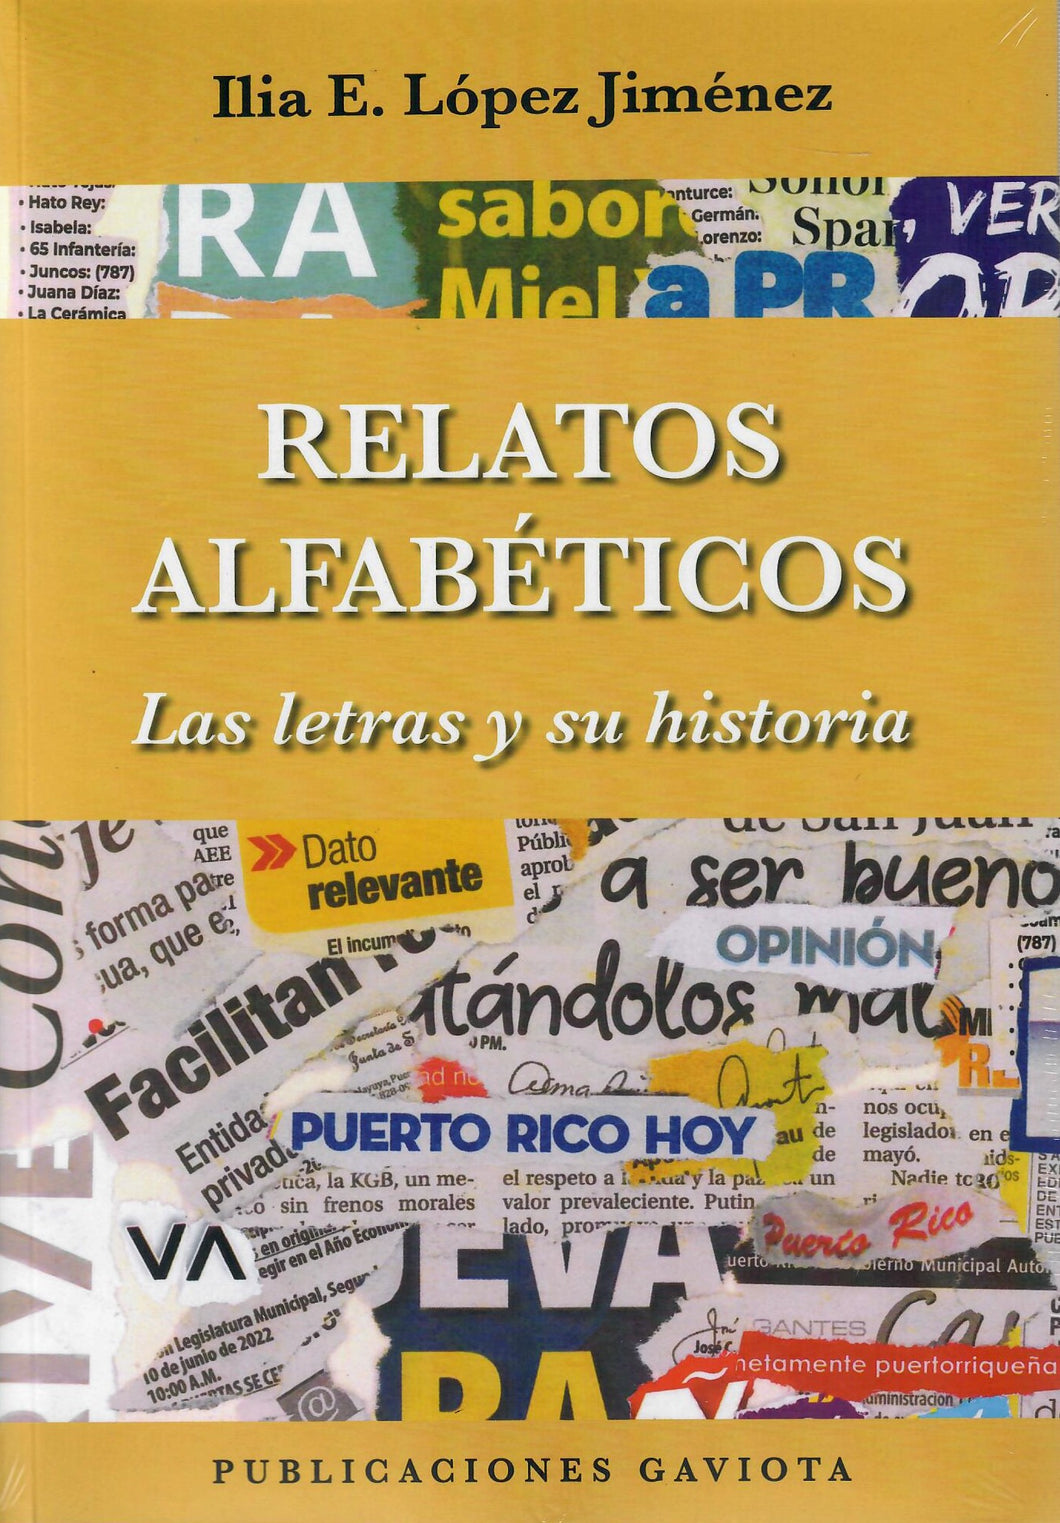 RELATOS ALFABÉTICOS - Ilia E. López Jiménez